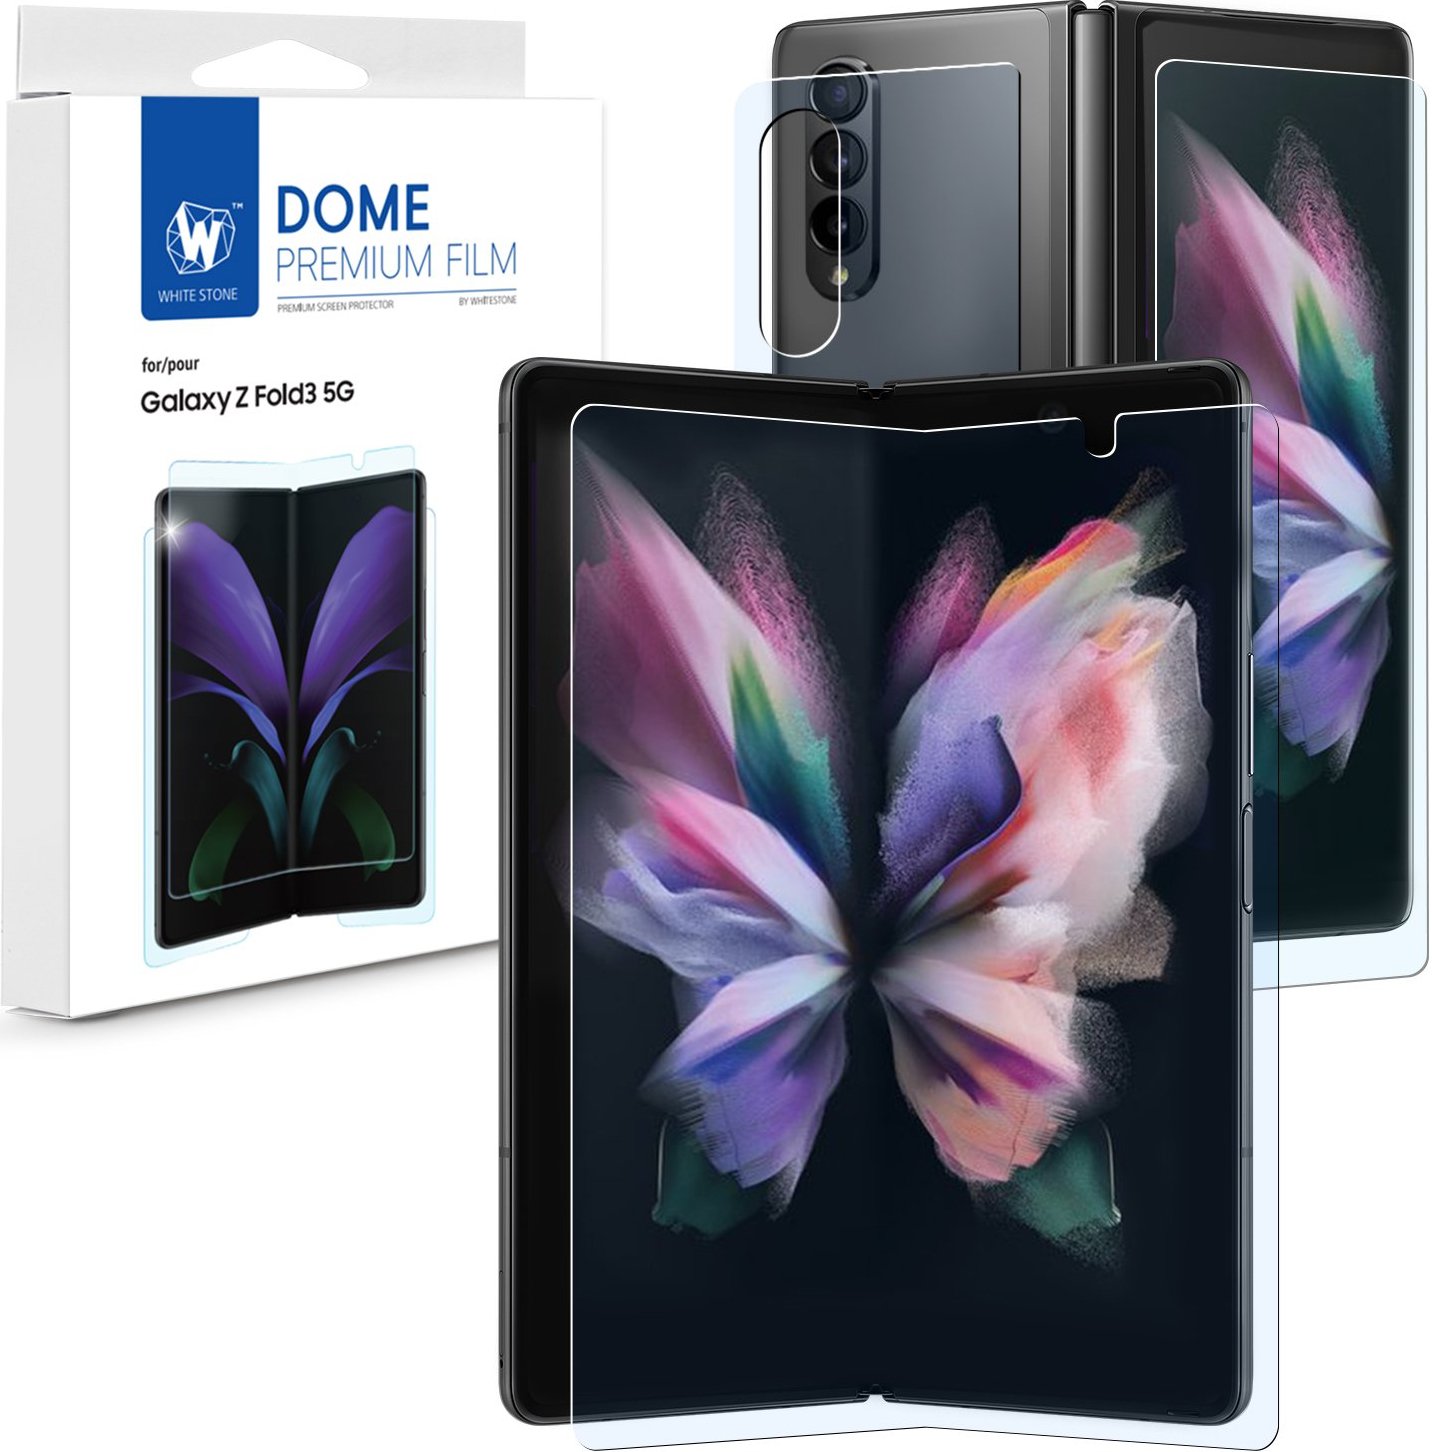 Whitestone Dome Epu Galaxy Z Fold 3 Render